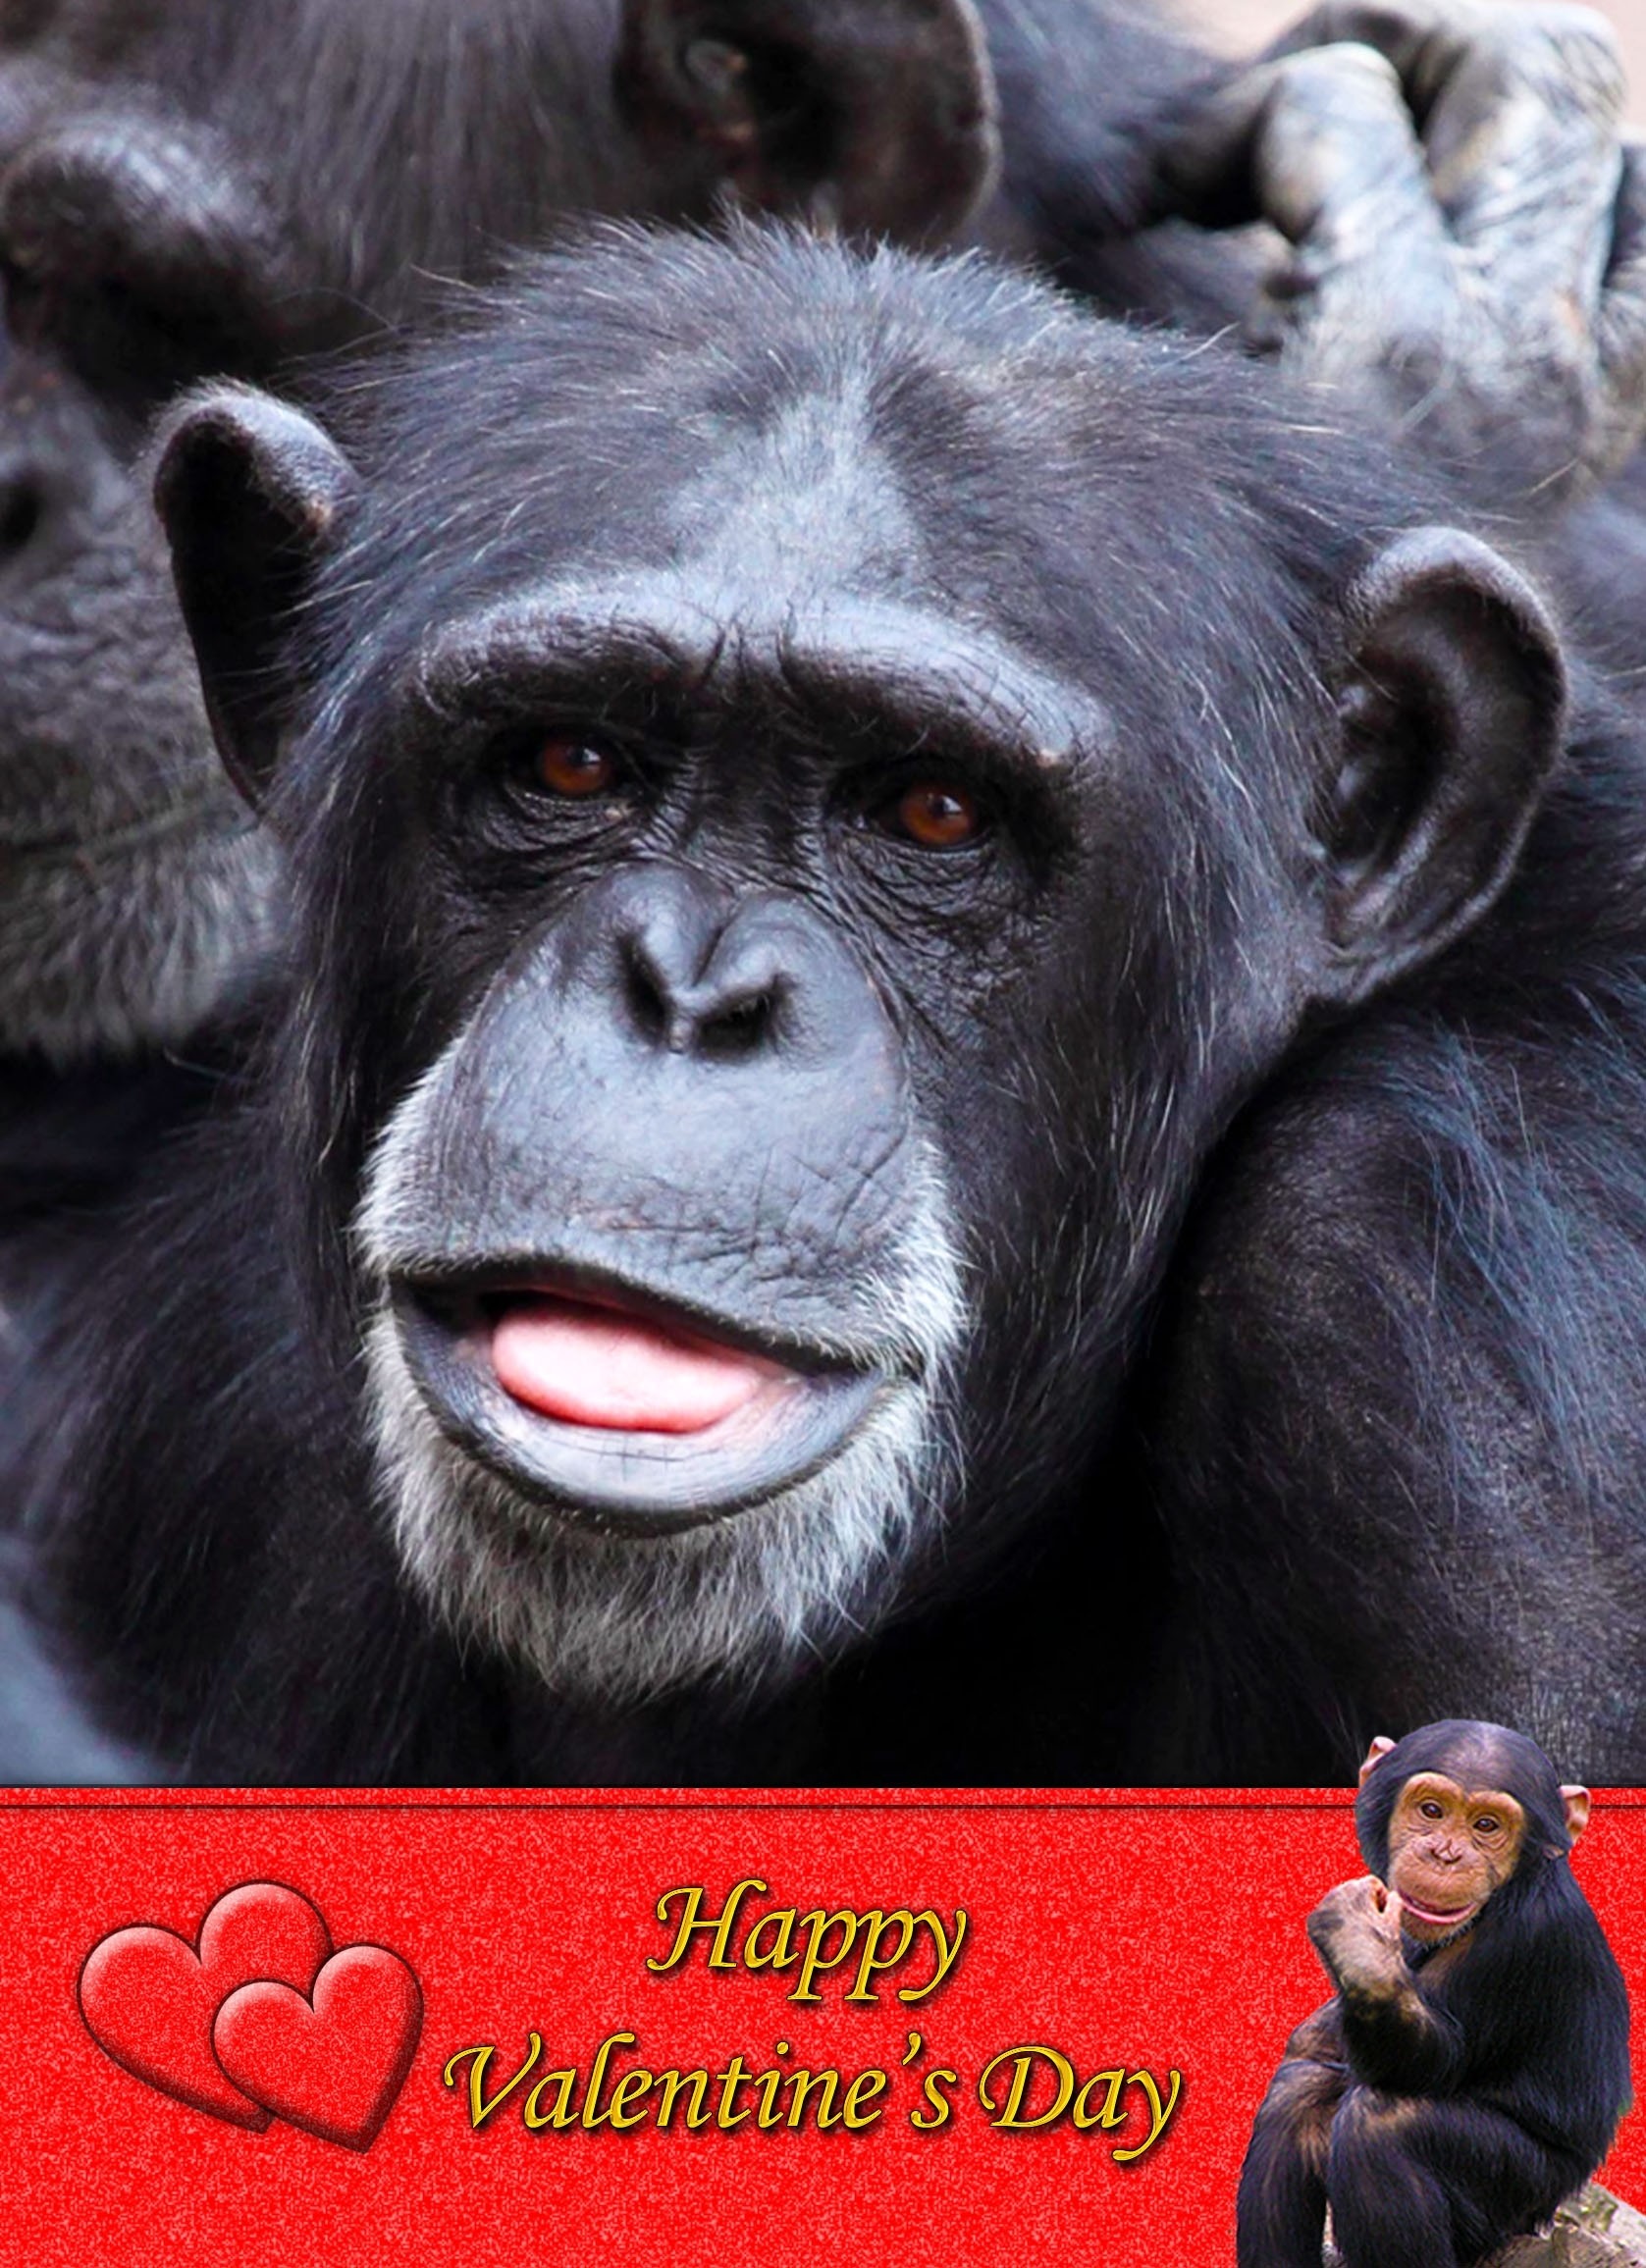 Chimpanzee Valentine's Day Card